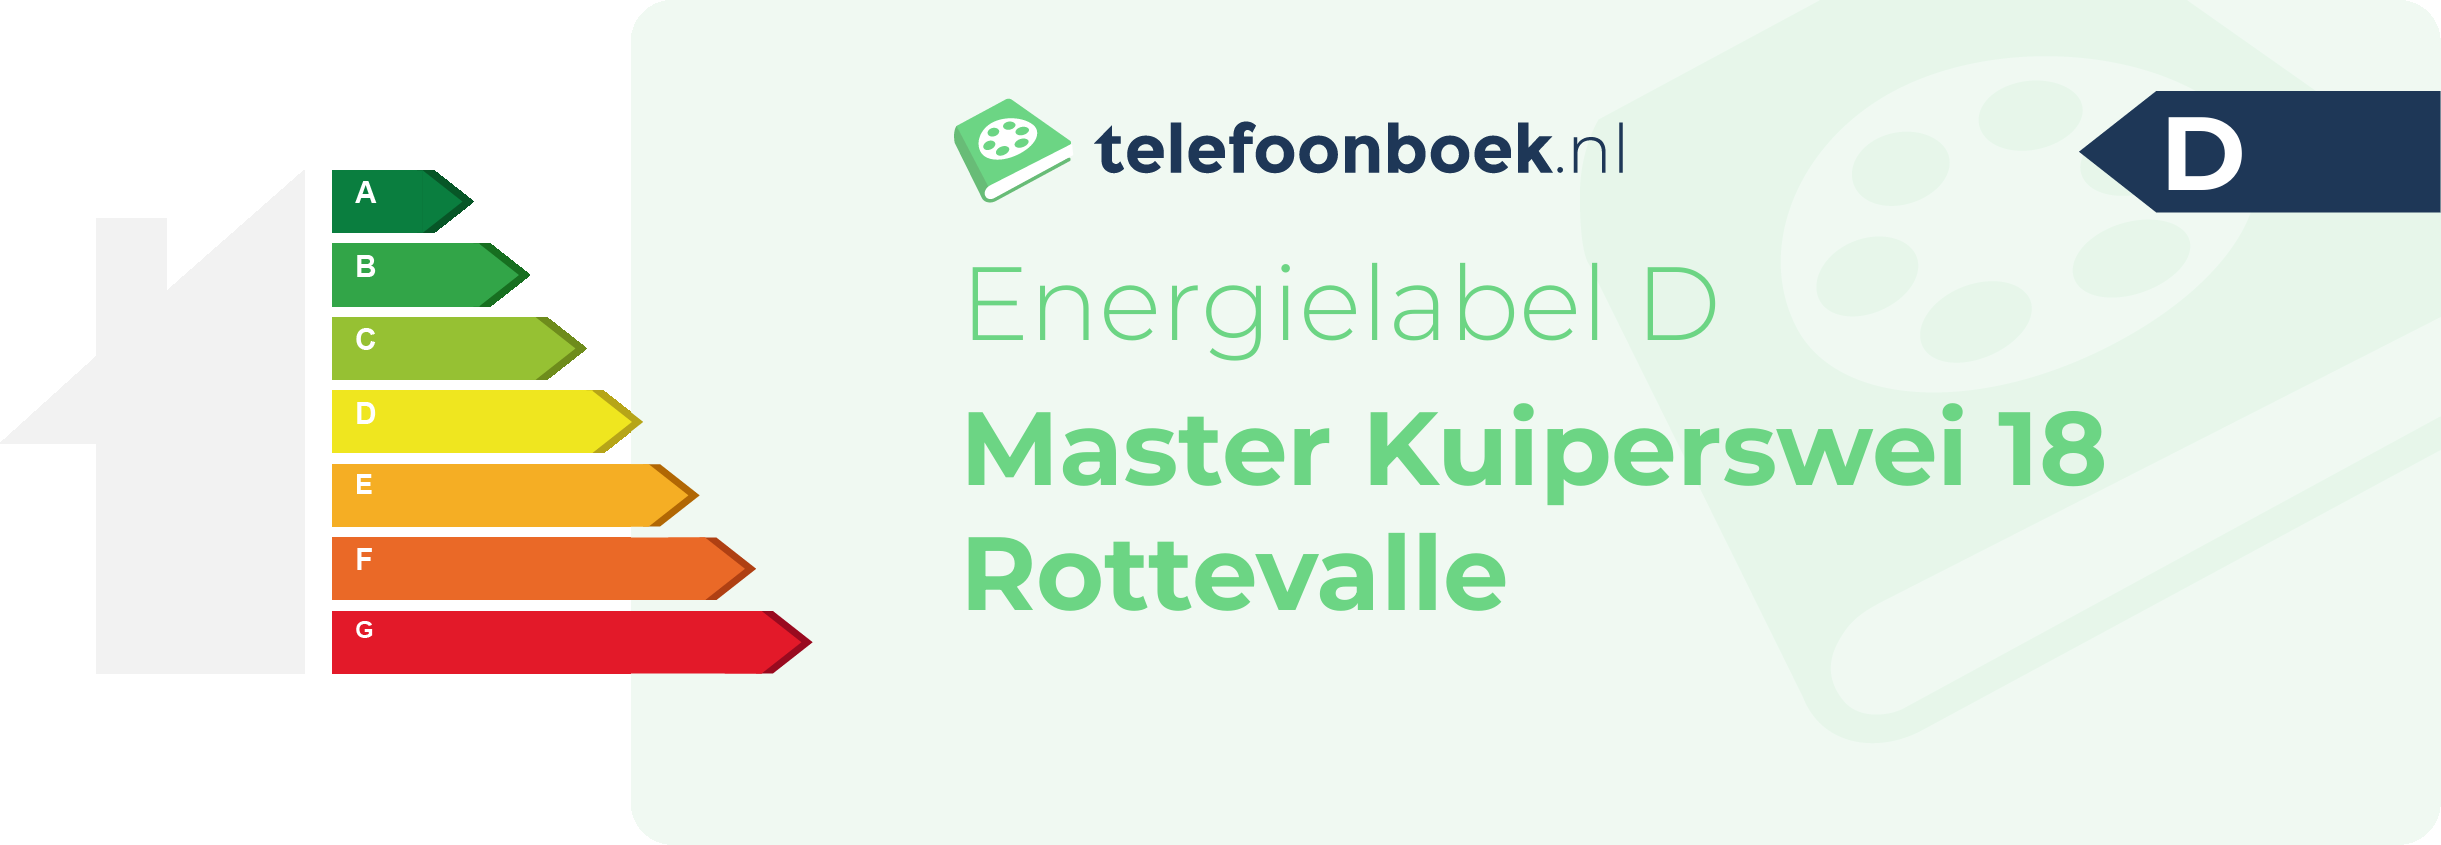 Energielabel Master Kuiperswei 18 Rottevalle